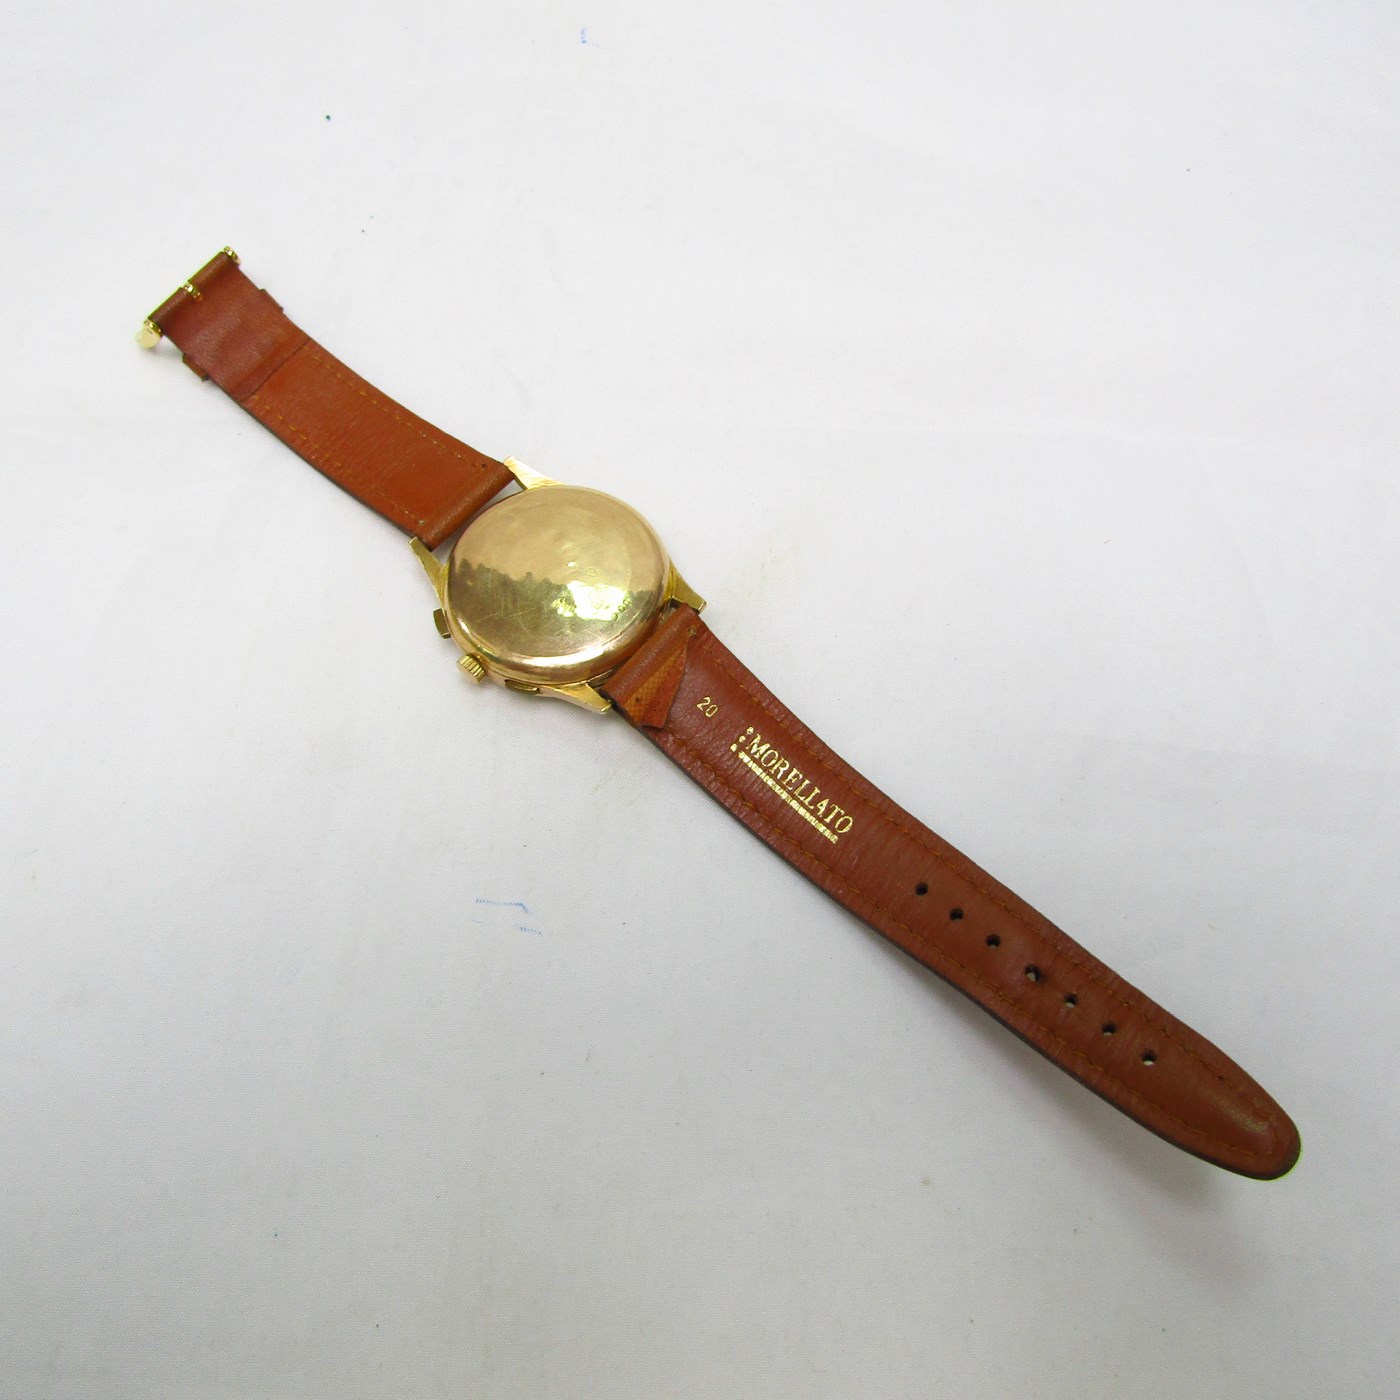 CHRONOGRAPHE SUISSE. Reloj Cronógrafo de pulsera para caballero. Oro 18k. Suiza, ca. 1950